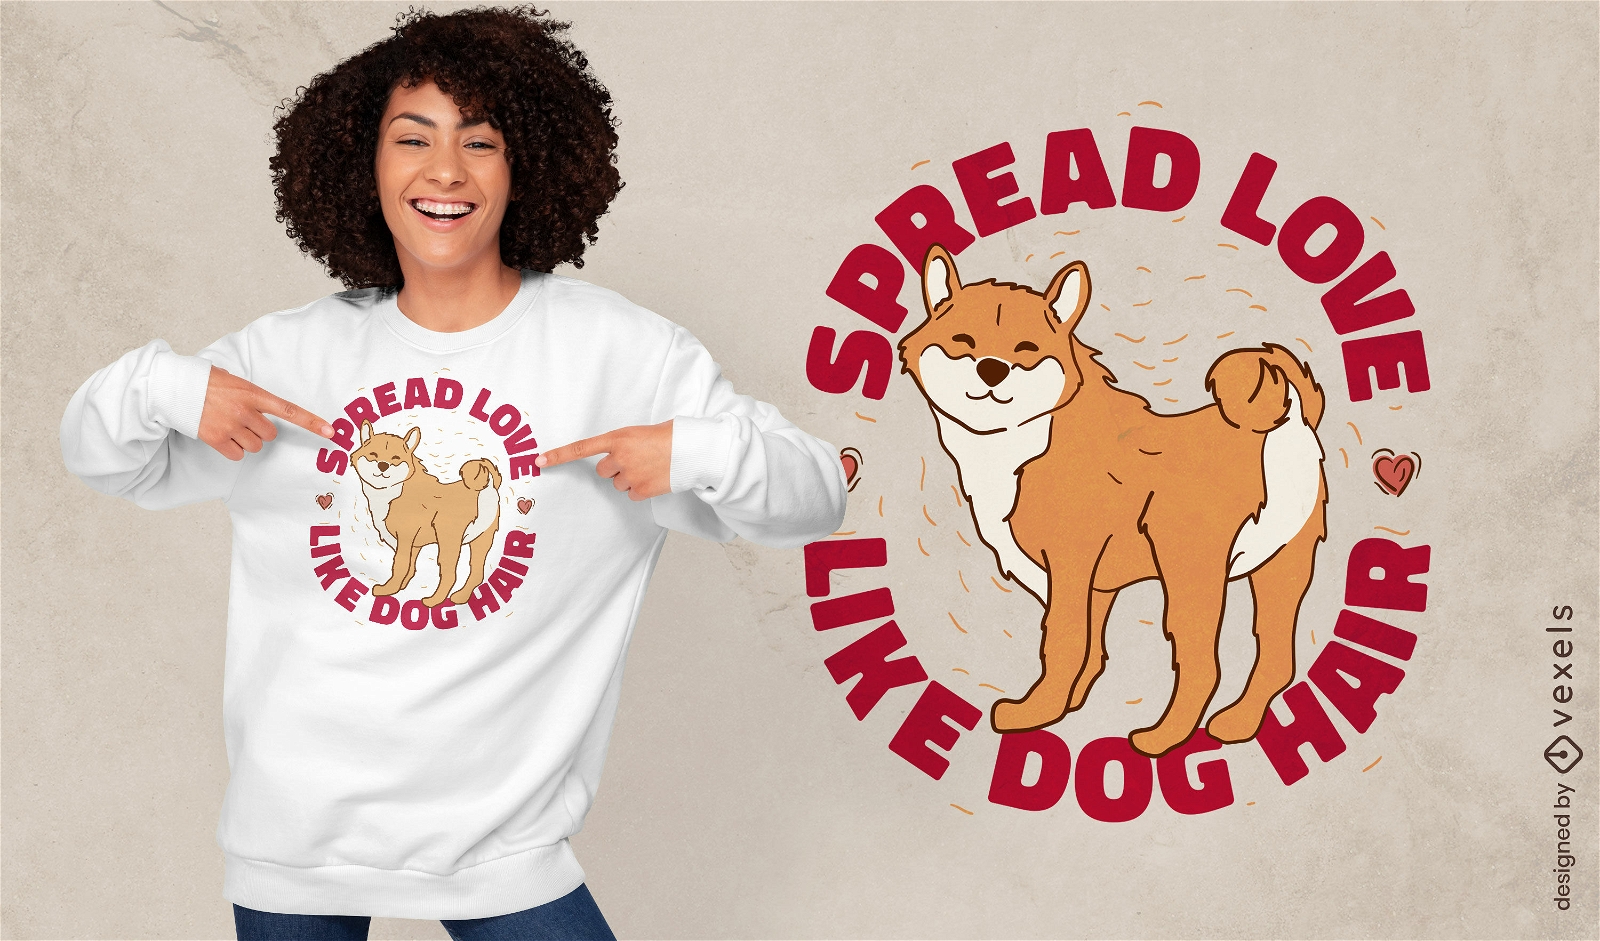 Spread love dog parent t-shirt design